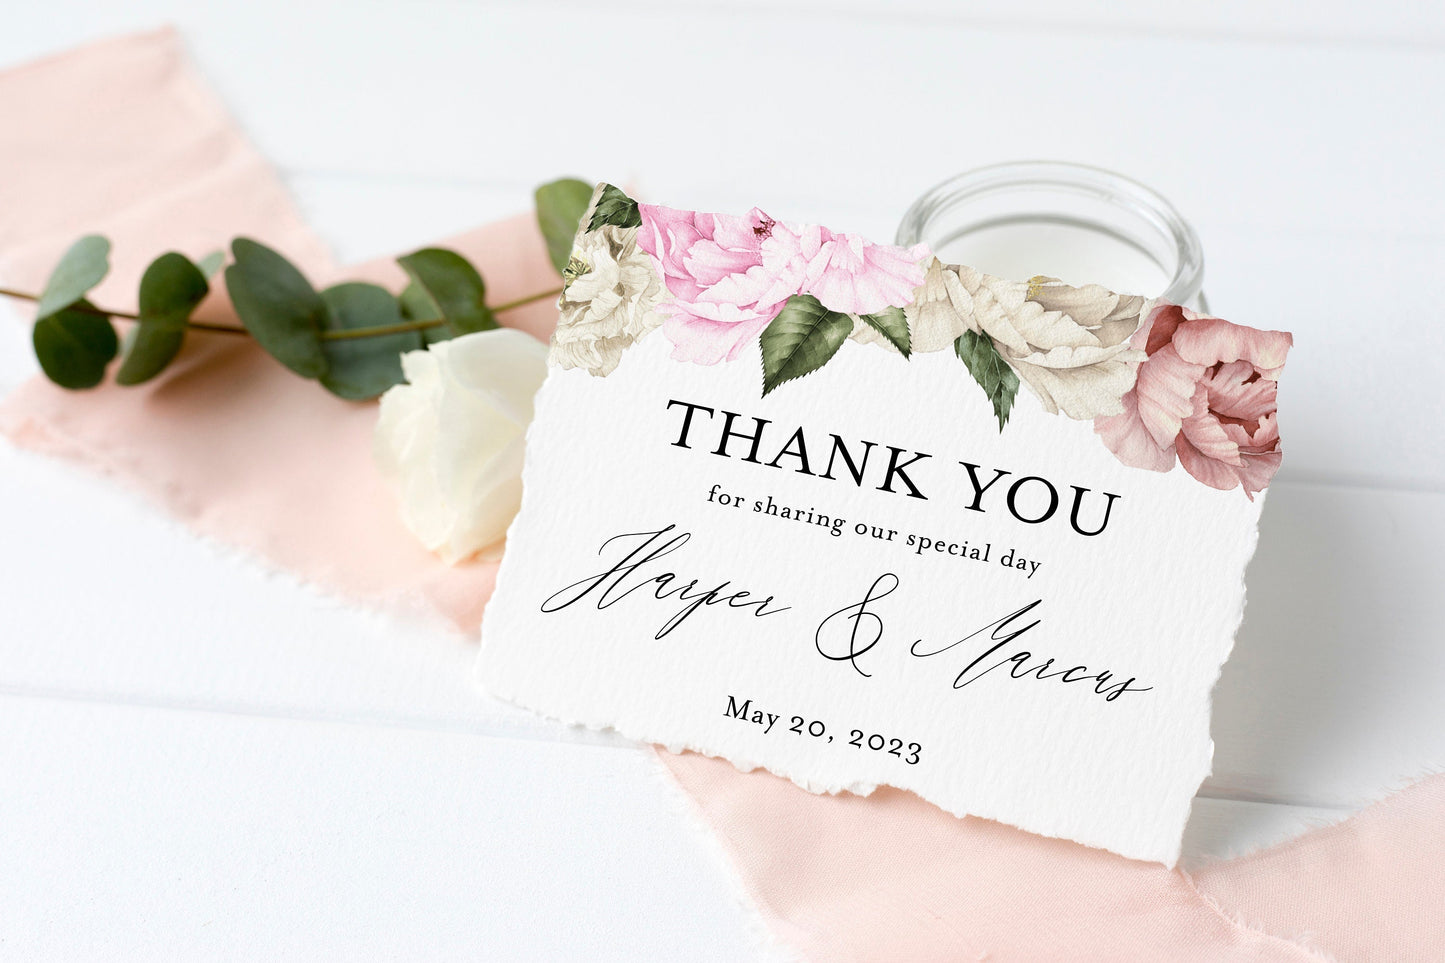 Printable Floral Wedding Invitation Set Editable Template DIY Instant Download Invites Invitation Suite 100% Editable - Harper WEDDING INVITATION SETS SAVVY PAPER CO